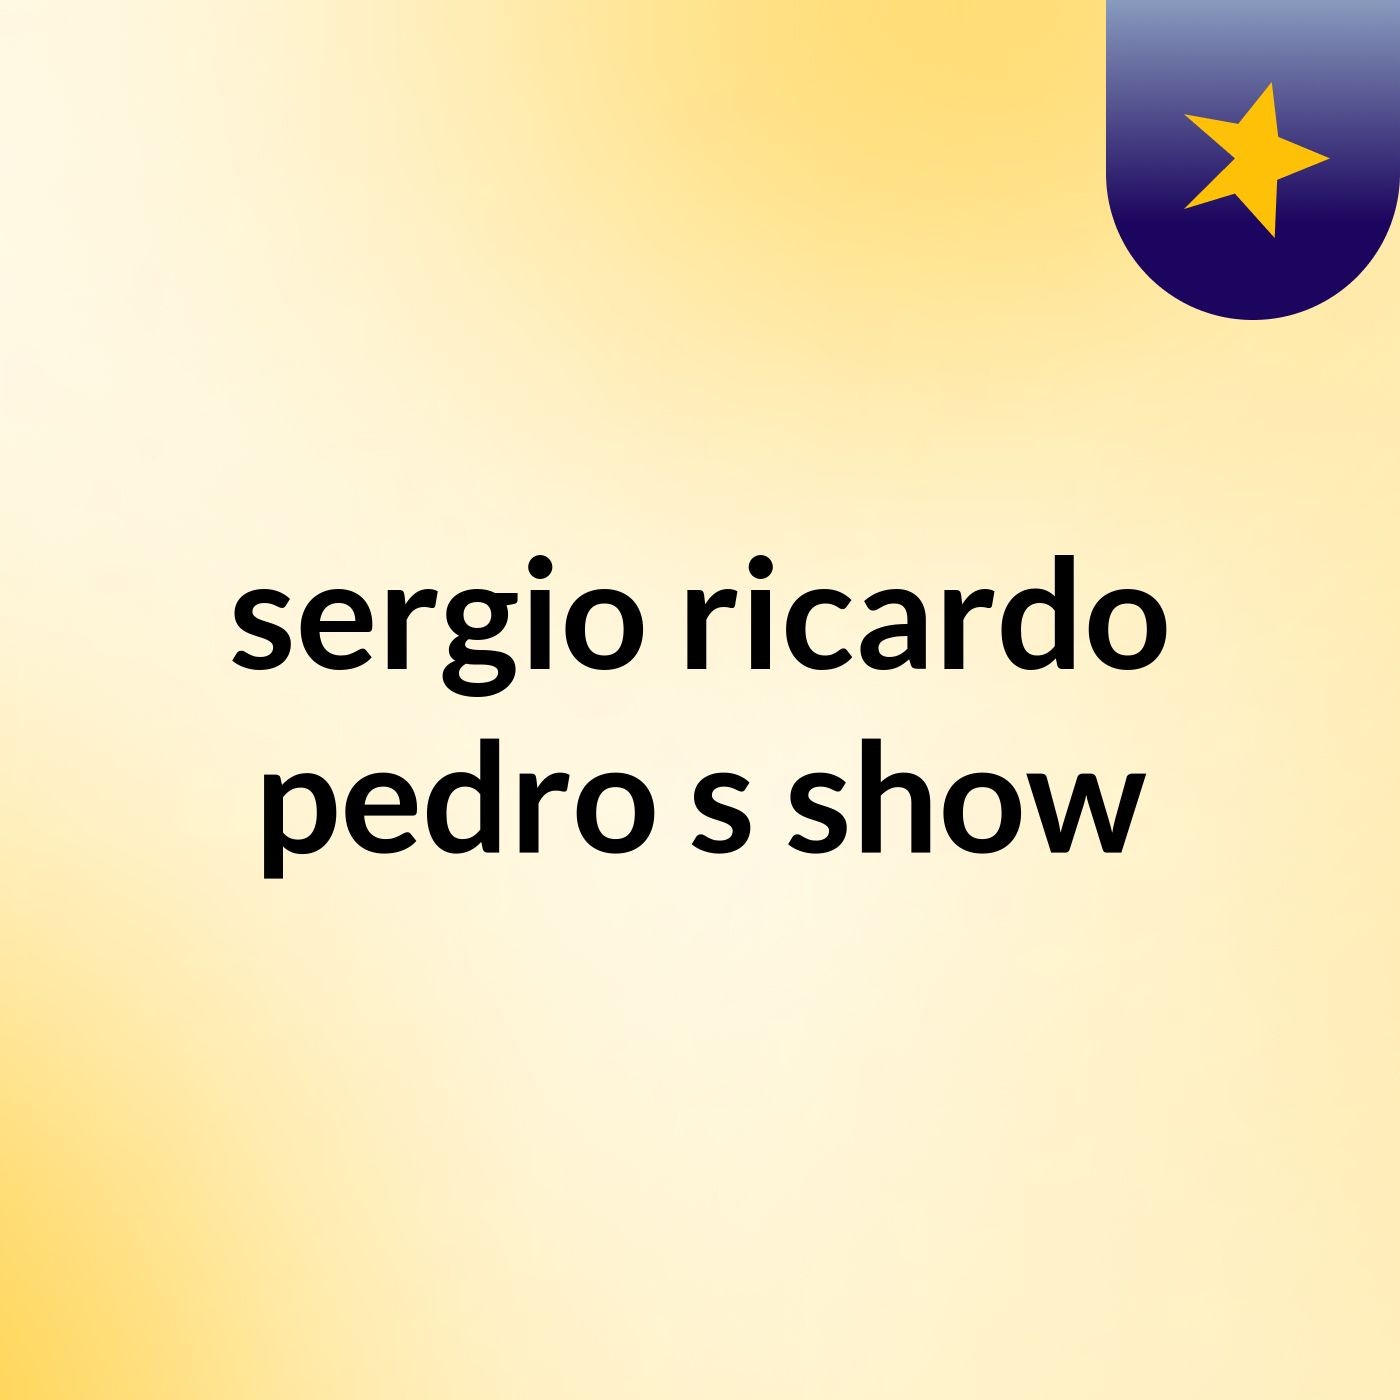 sergio ricardo pedro's show